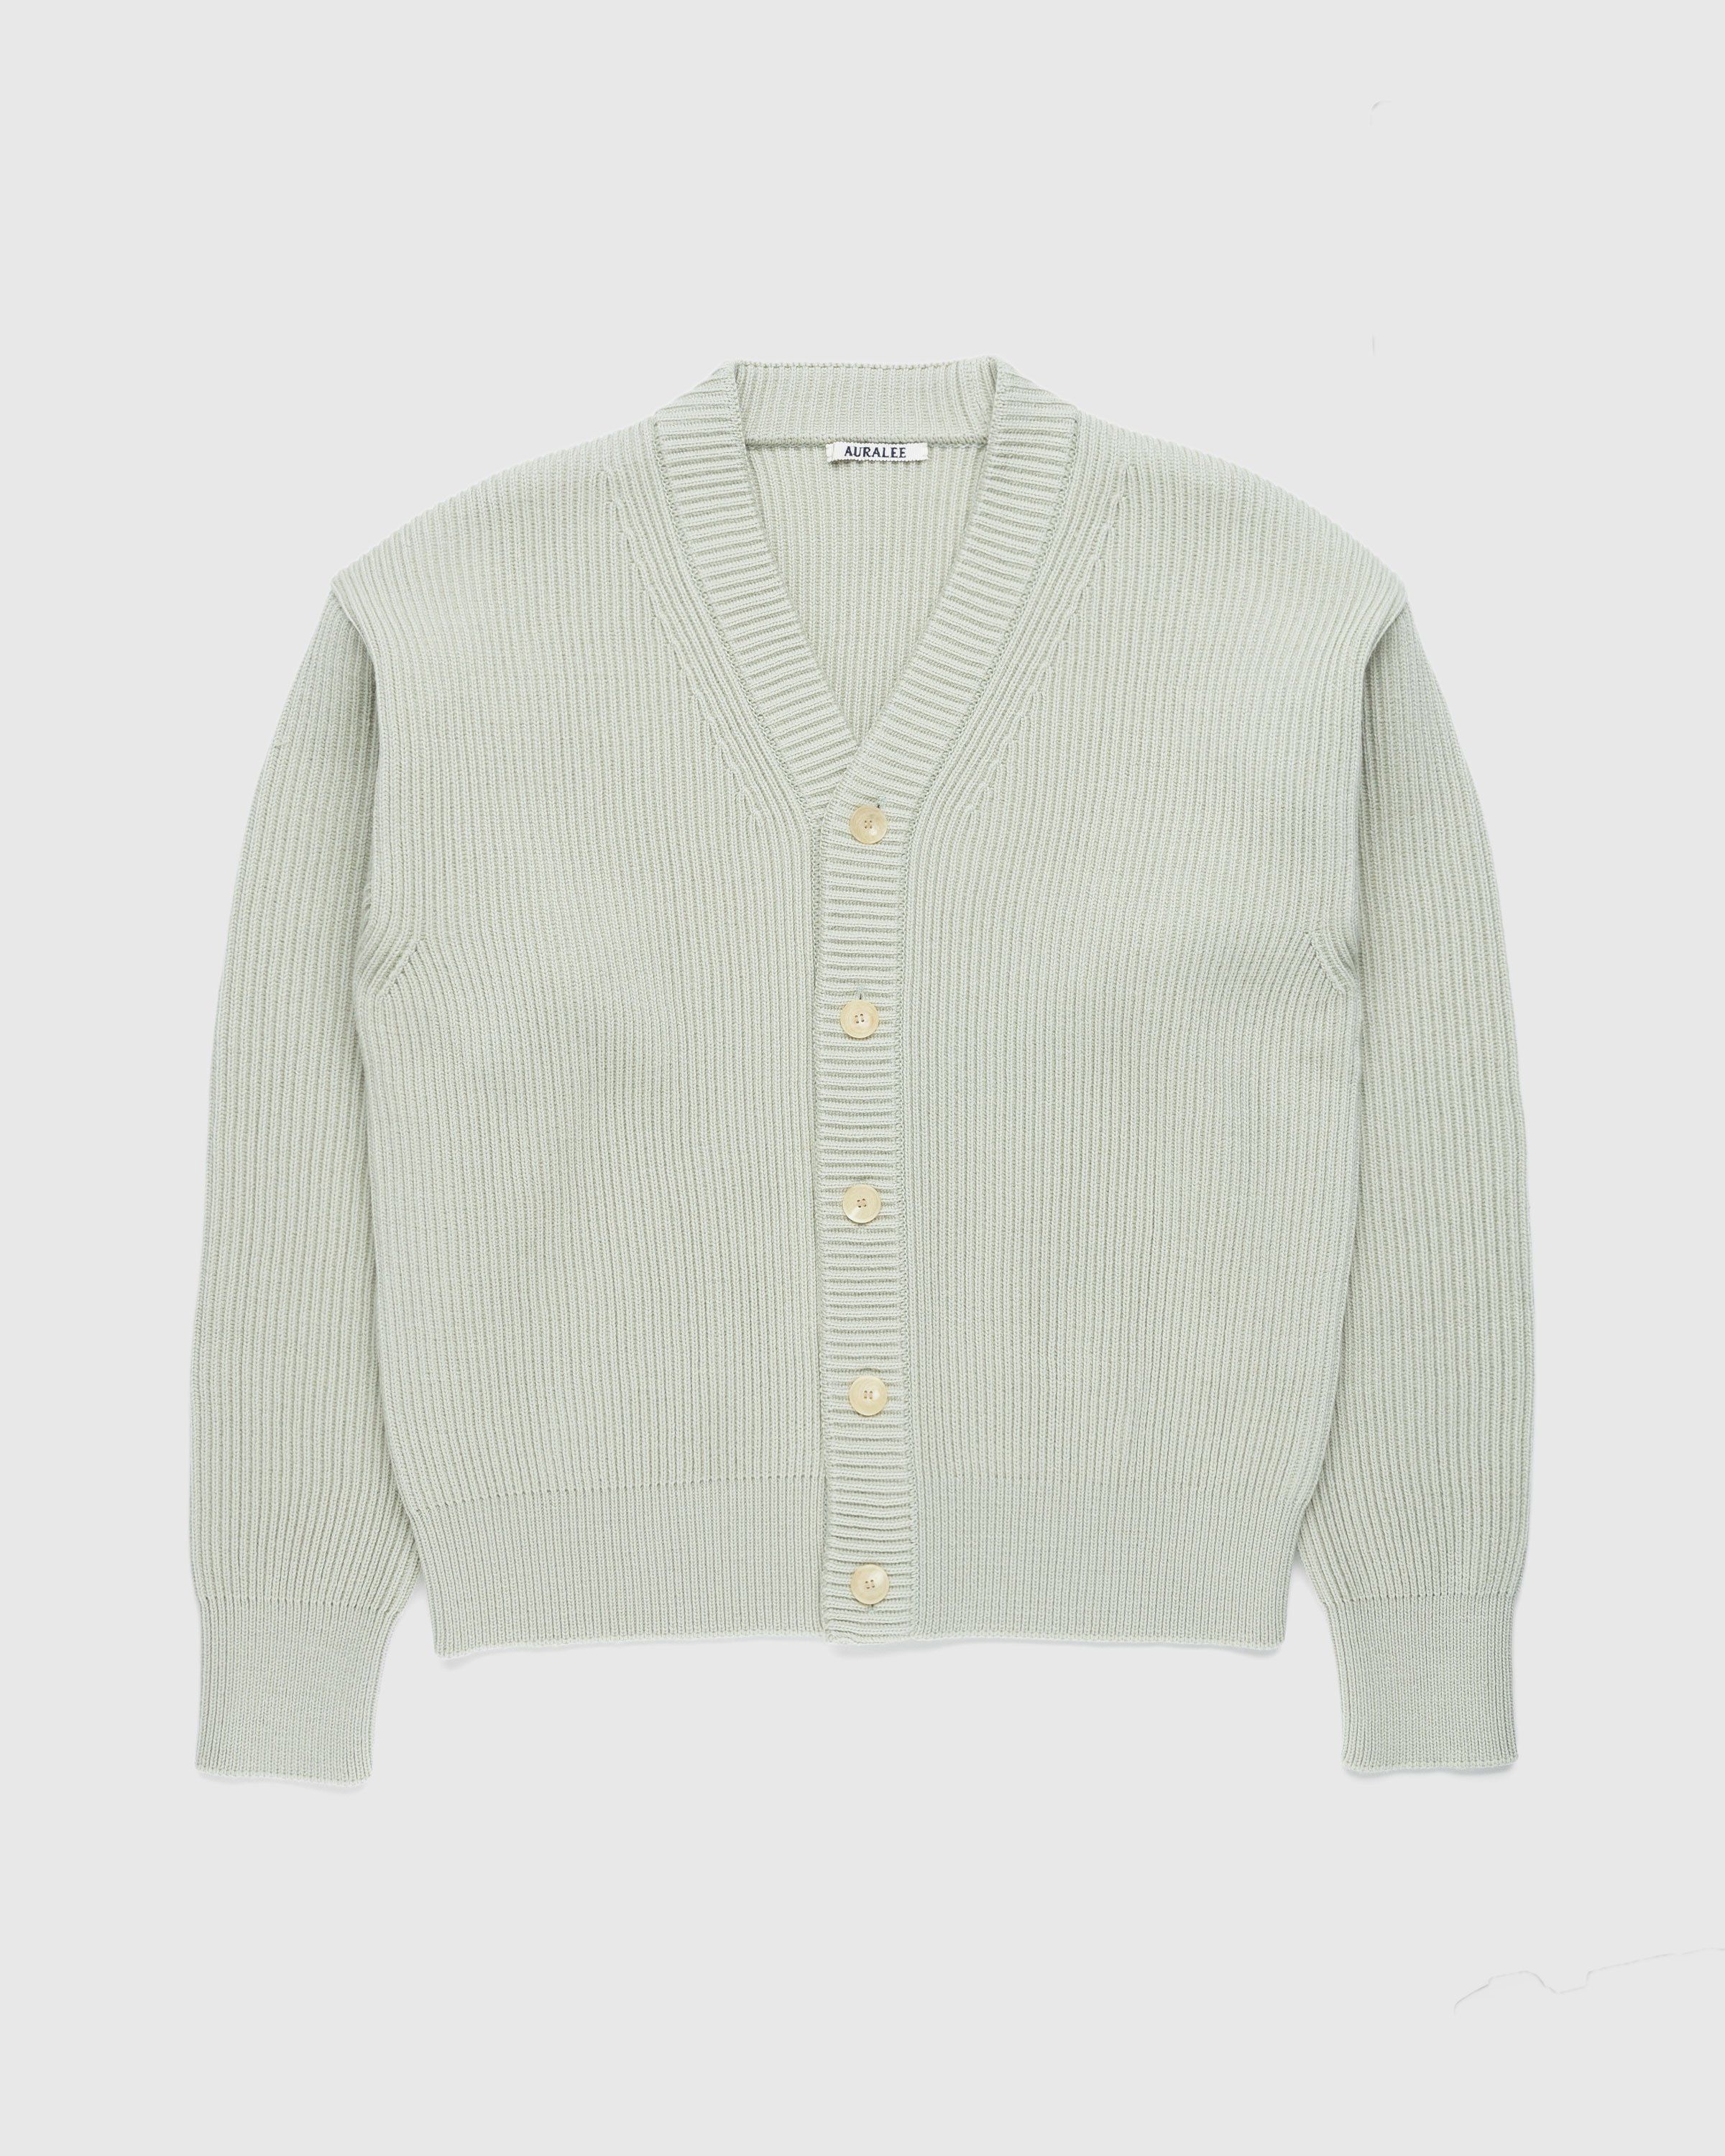 Auralee - French Merino Rib Knit Cardigan Light Khaki - Clothing - Green - Image 1